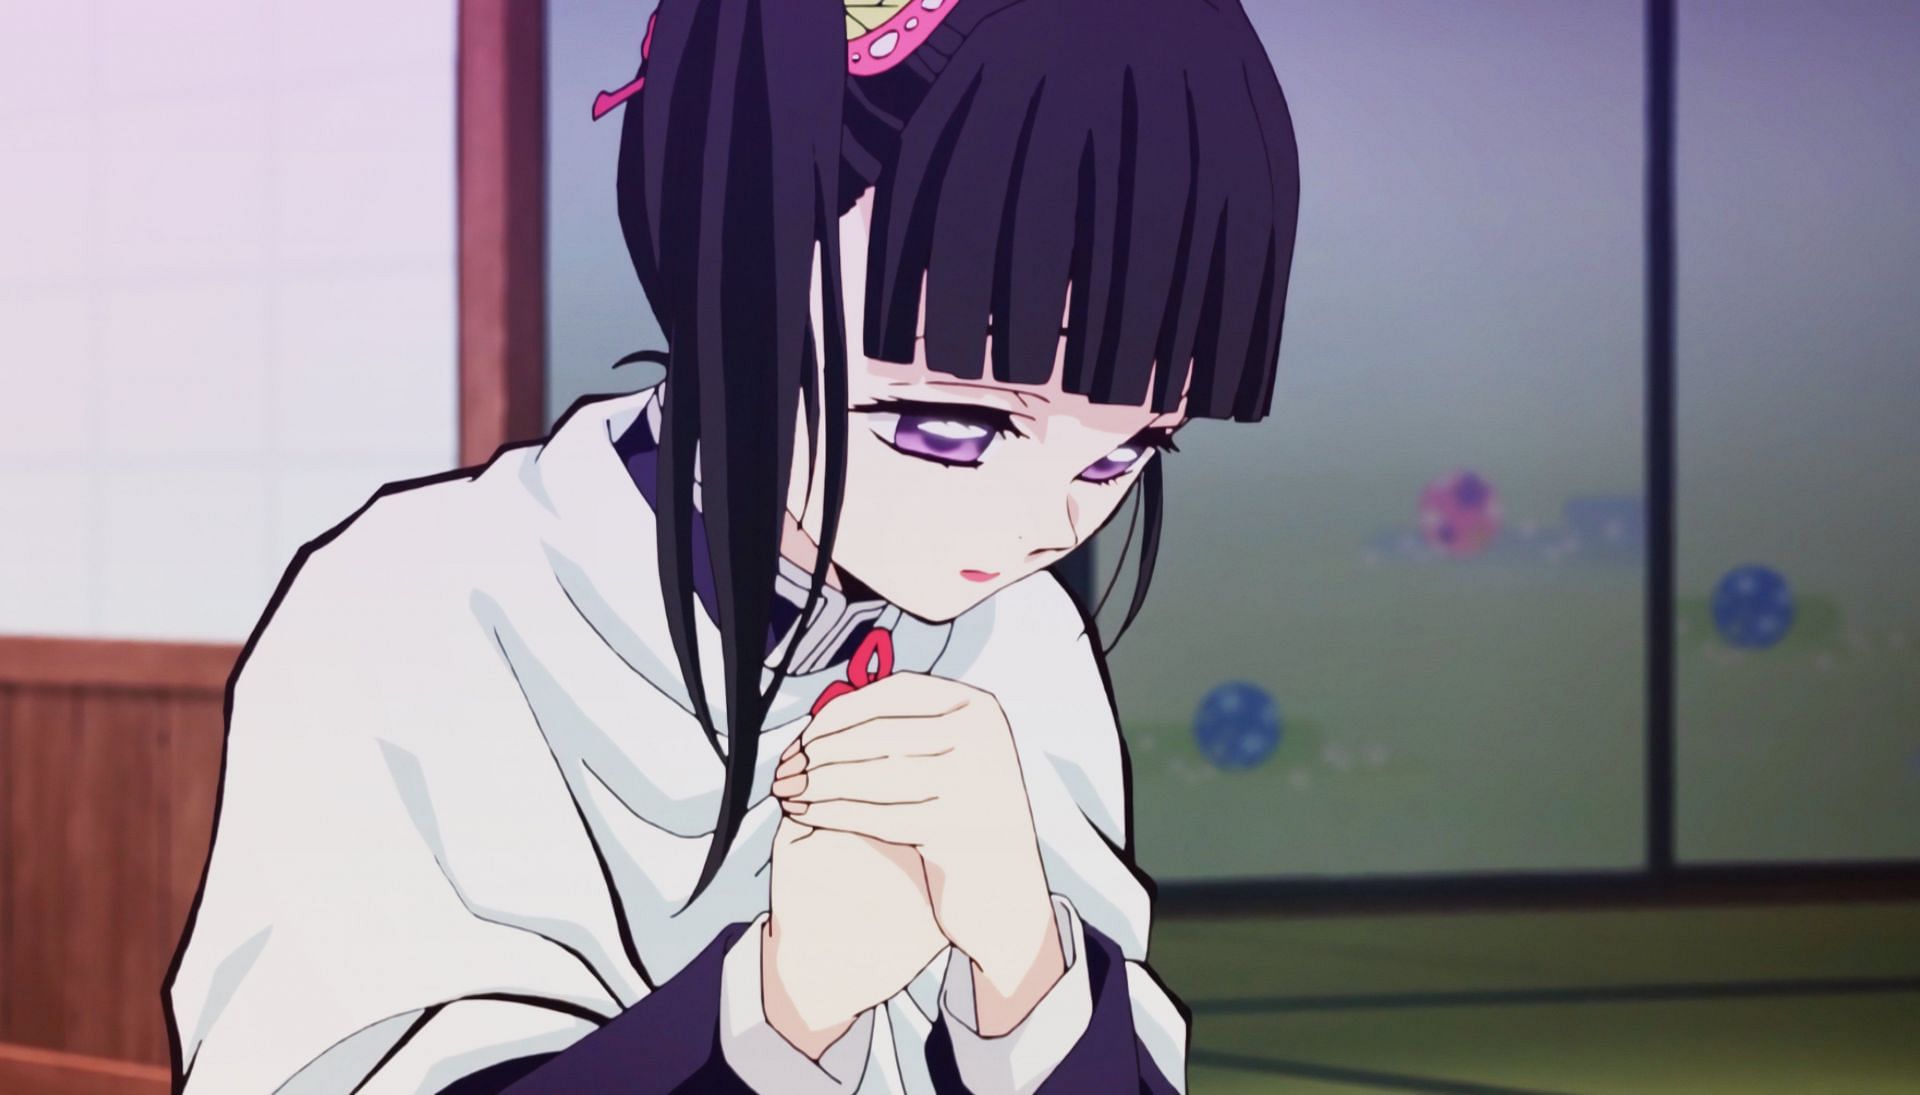 Kanao Tsuyuri as seen in the anime series (Image via Ufotable)